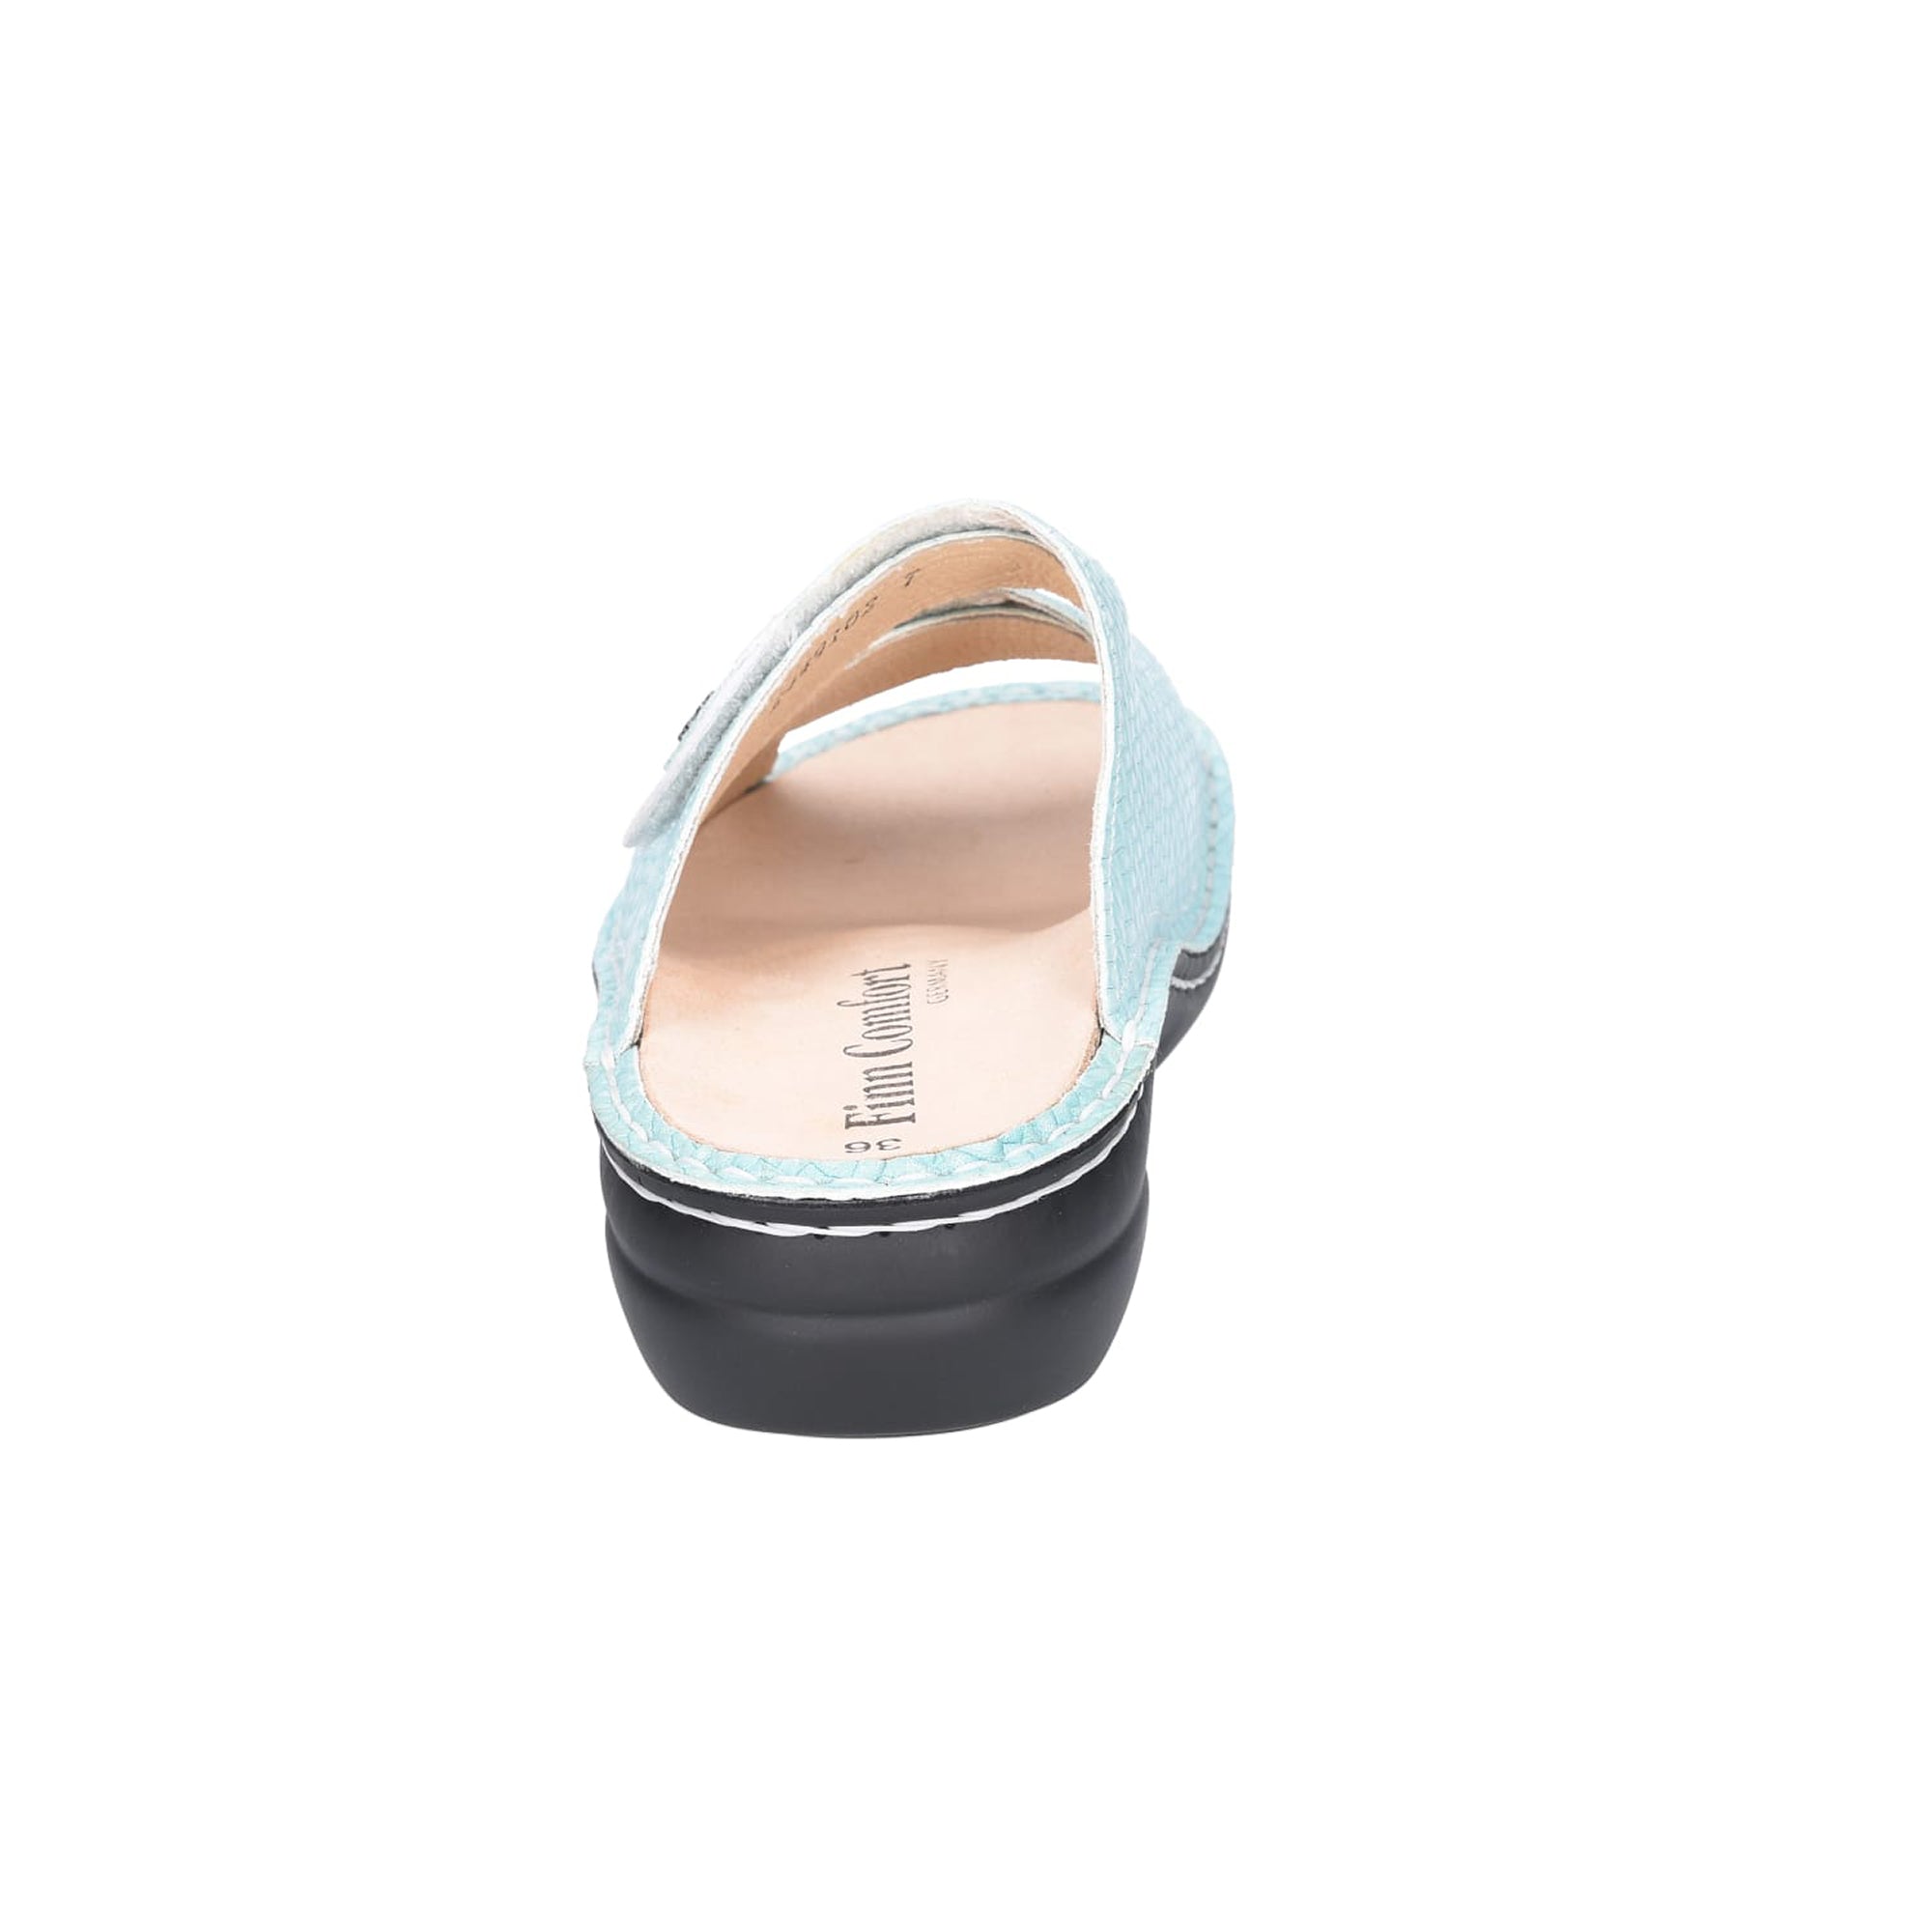 Finn Comfort 02554 KOS Women's Sandals, Turquoise - Stylish & Comfortable